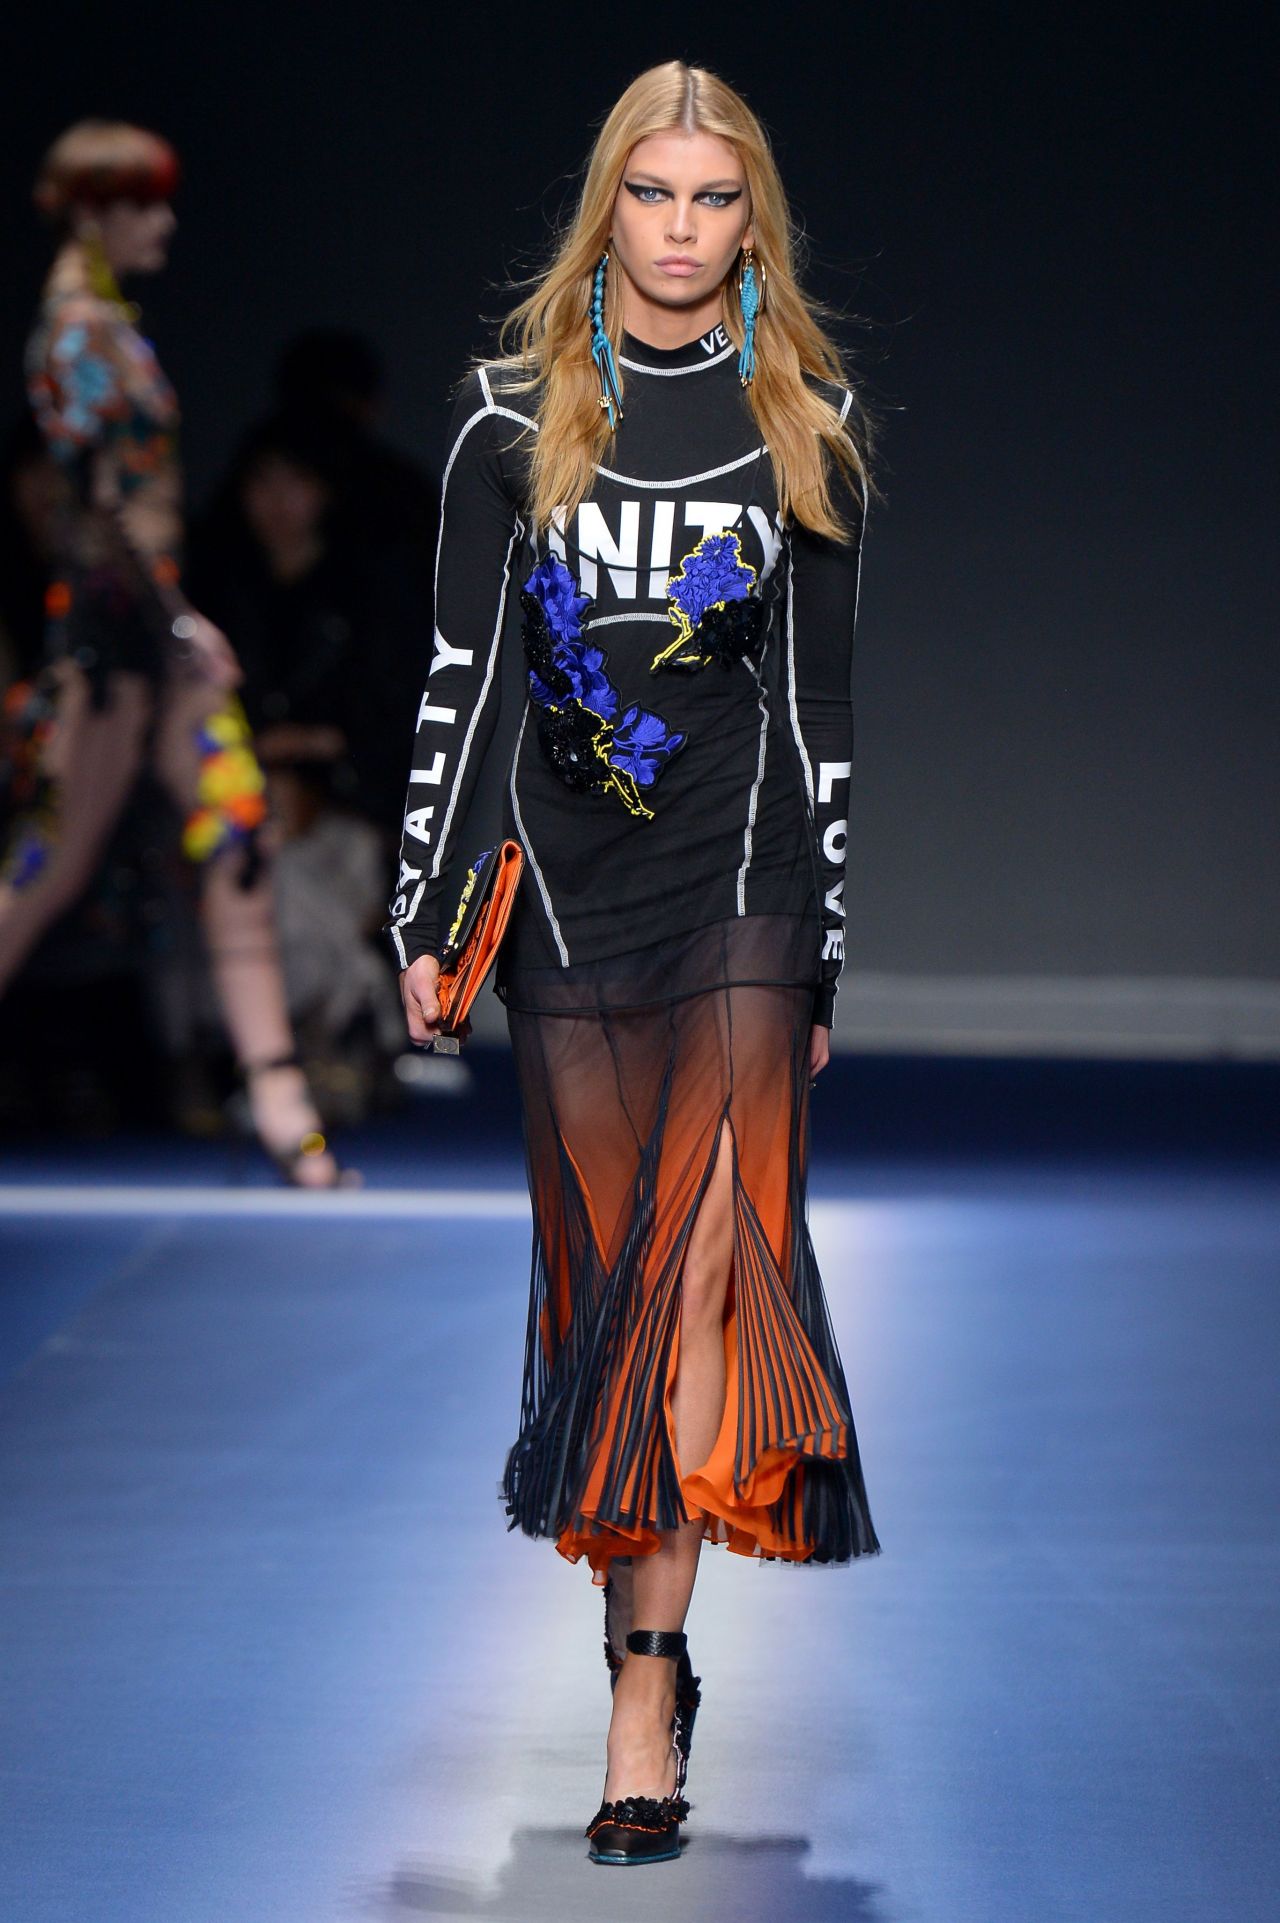 Stella Maxwell Walks The Runway During Milan Fashion Week Versace